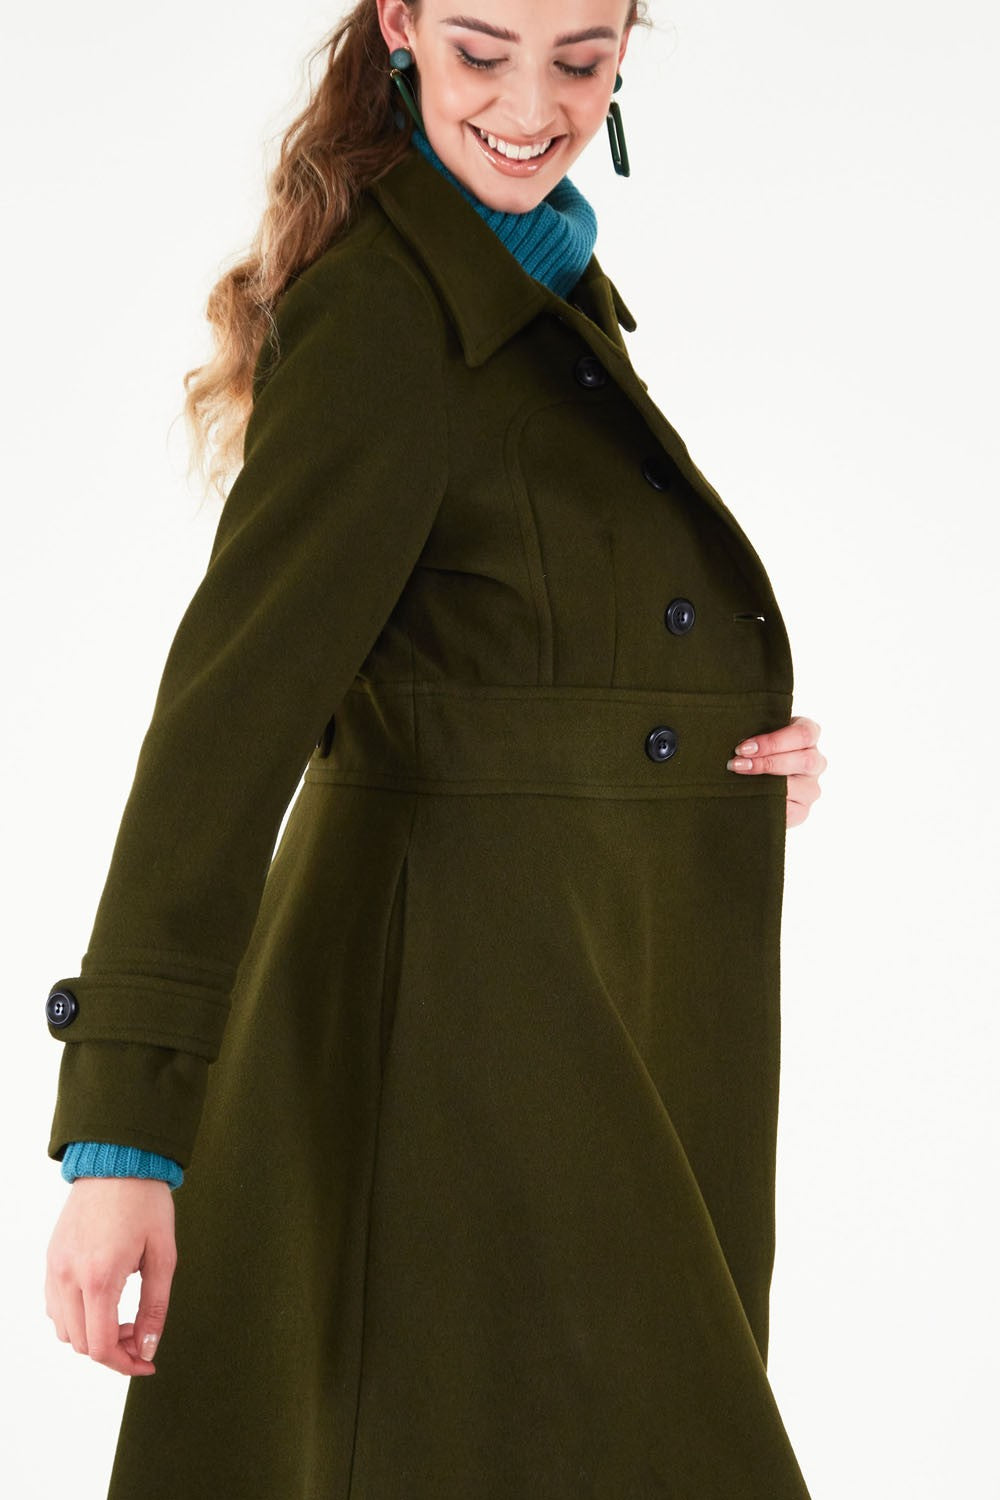 Martha 1940s Inspired Longline Dark Green Coat